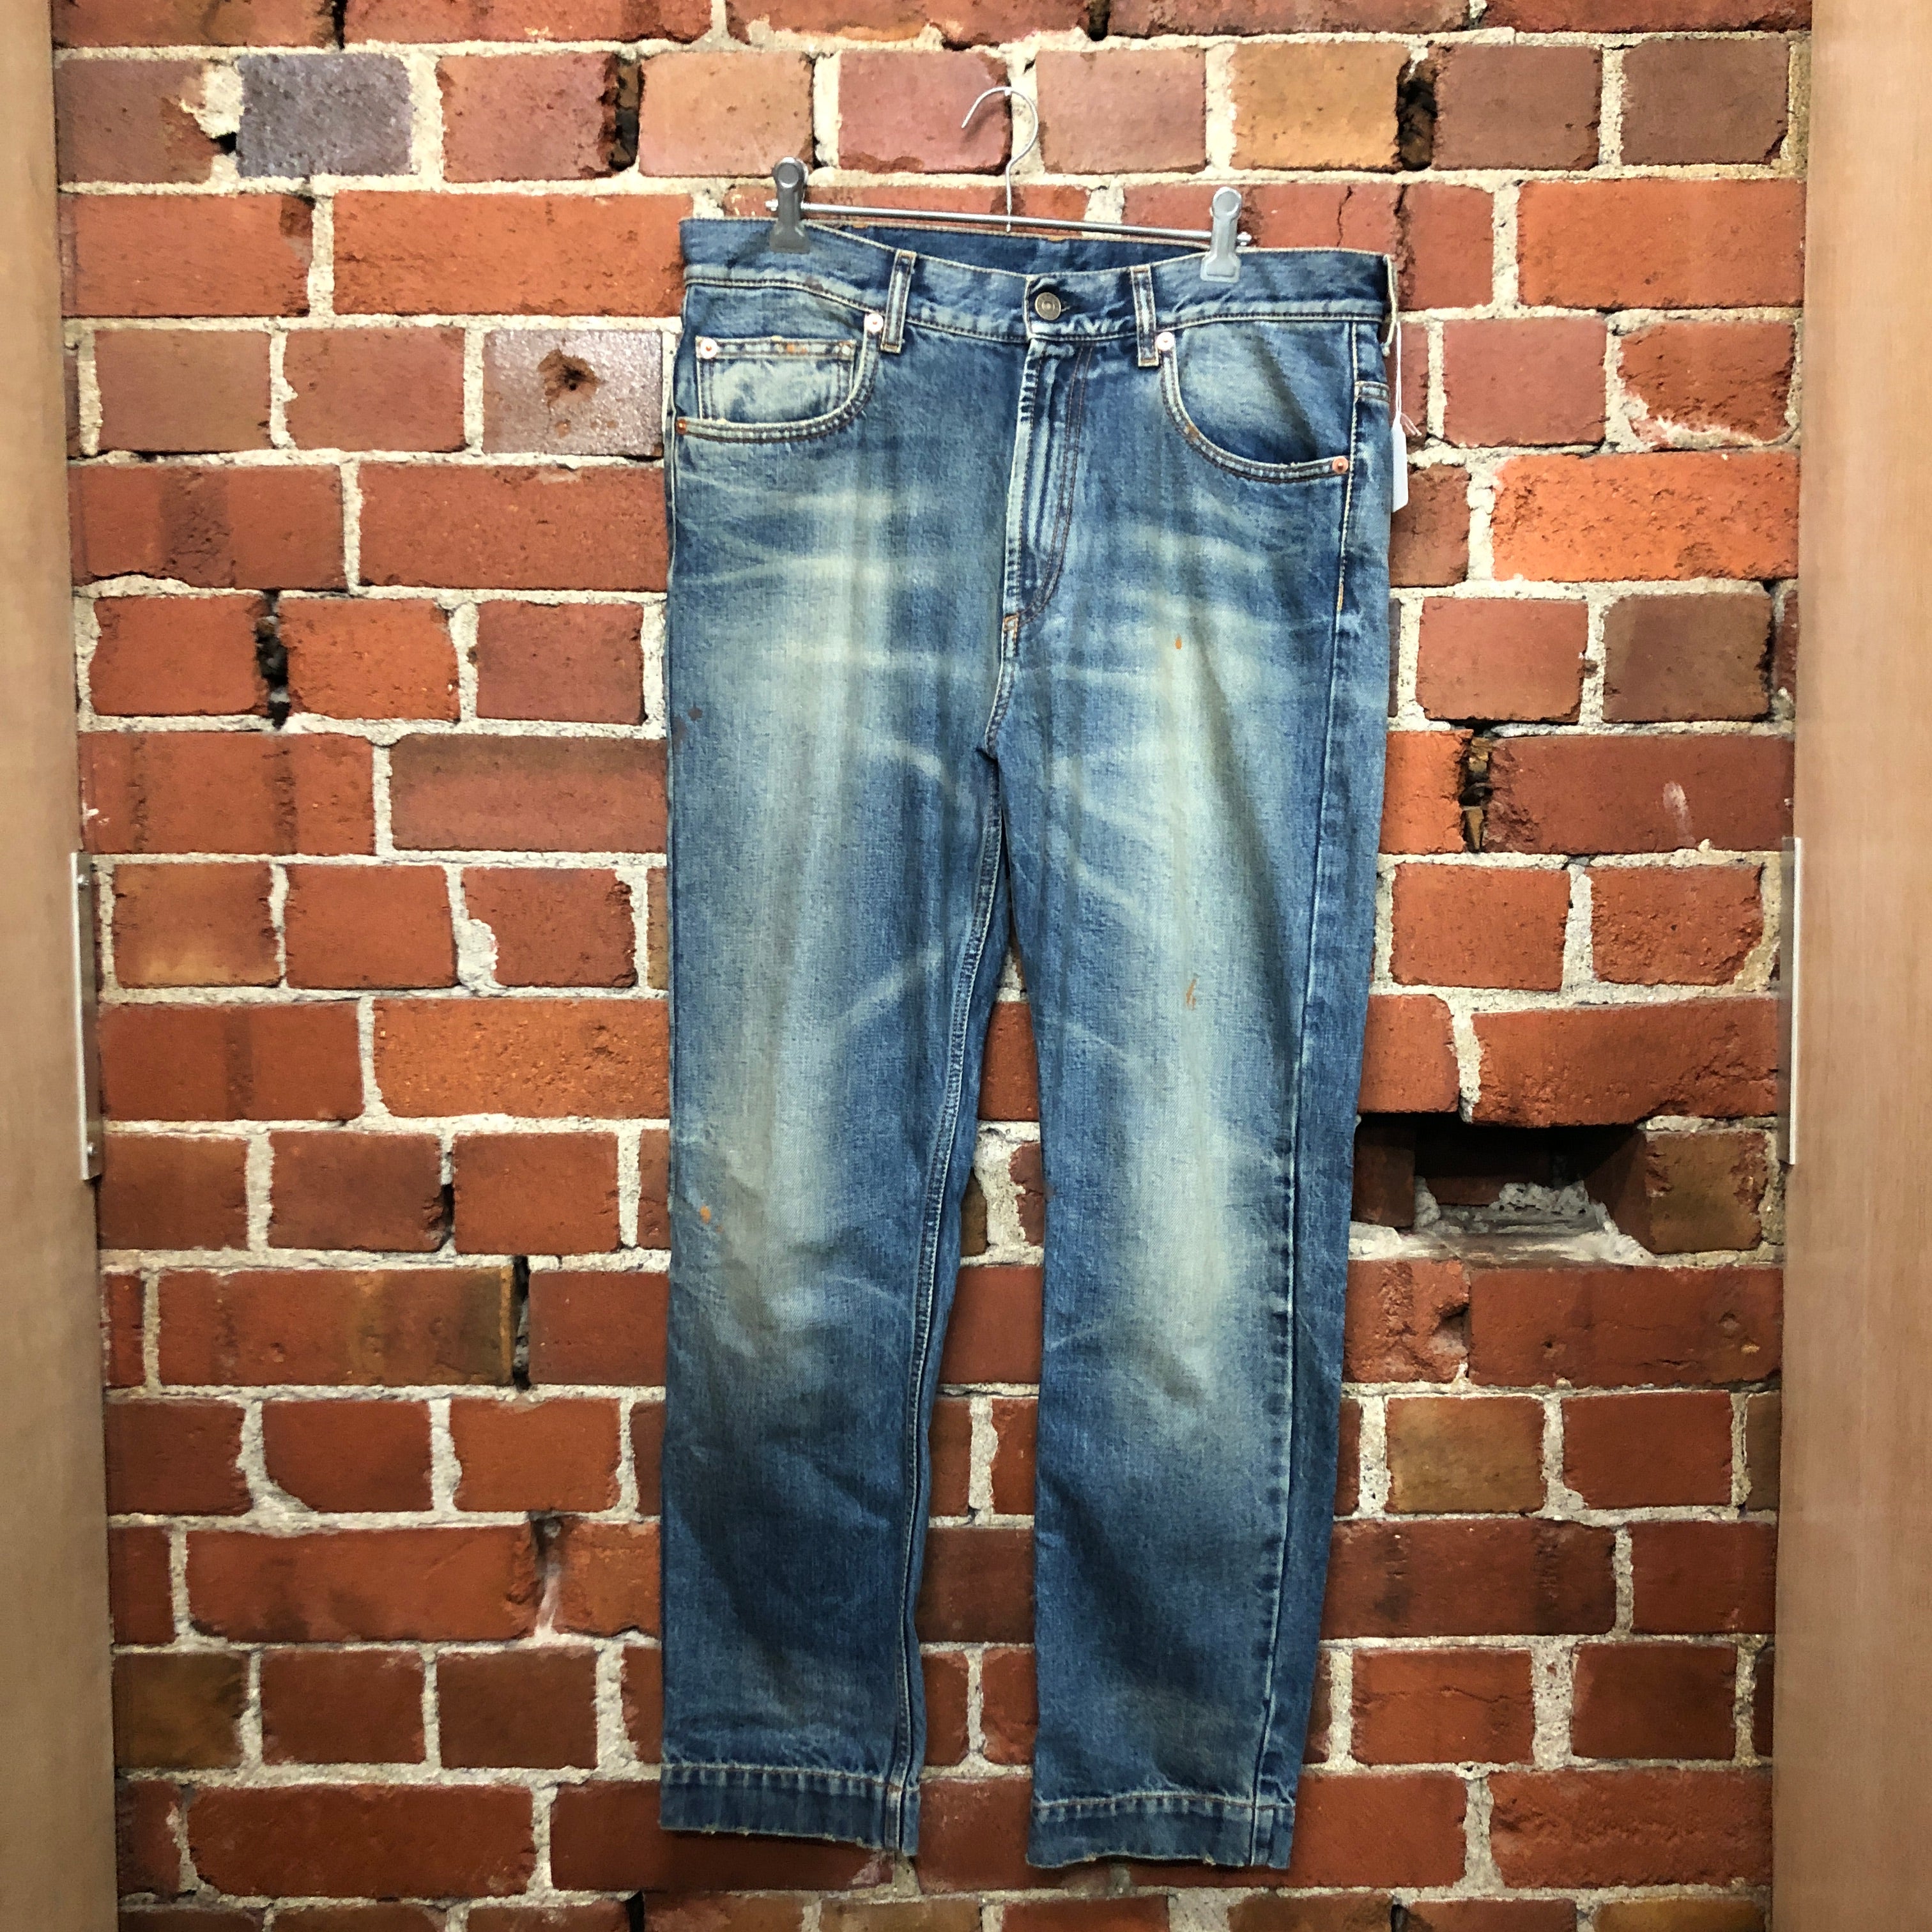 GUCCI 'painters' jeans 34